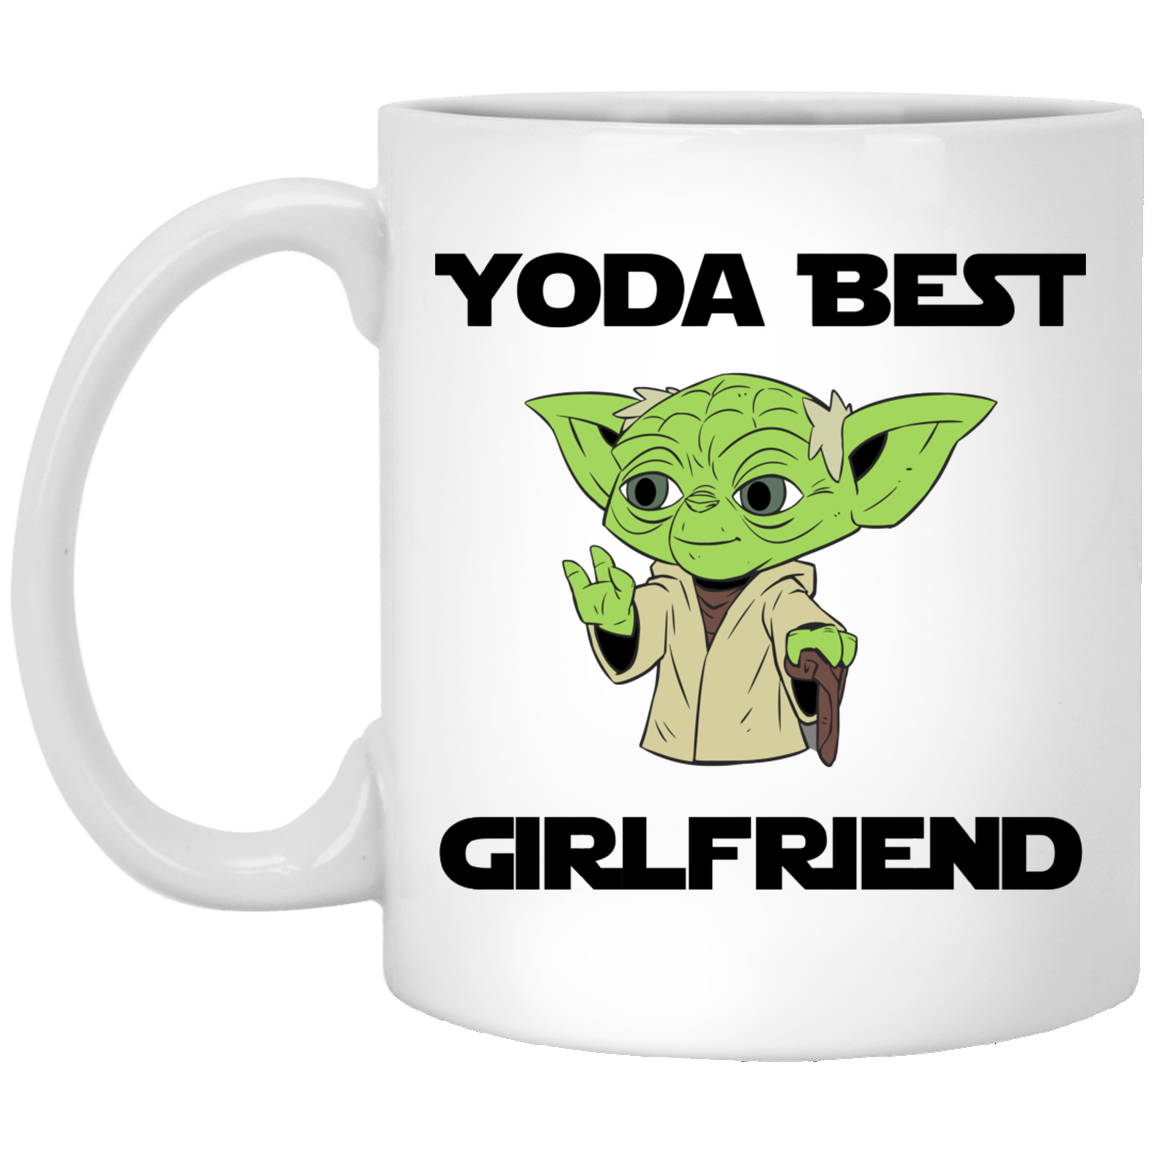 Yoda Best Girlfriend Mug